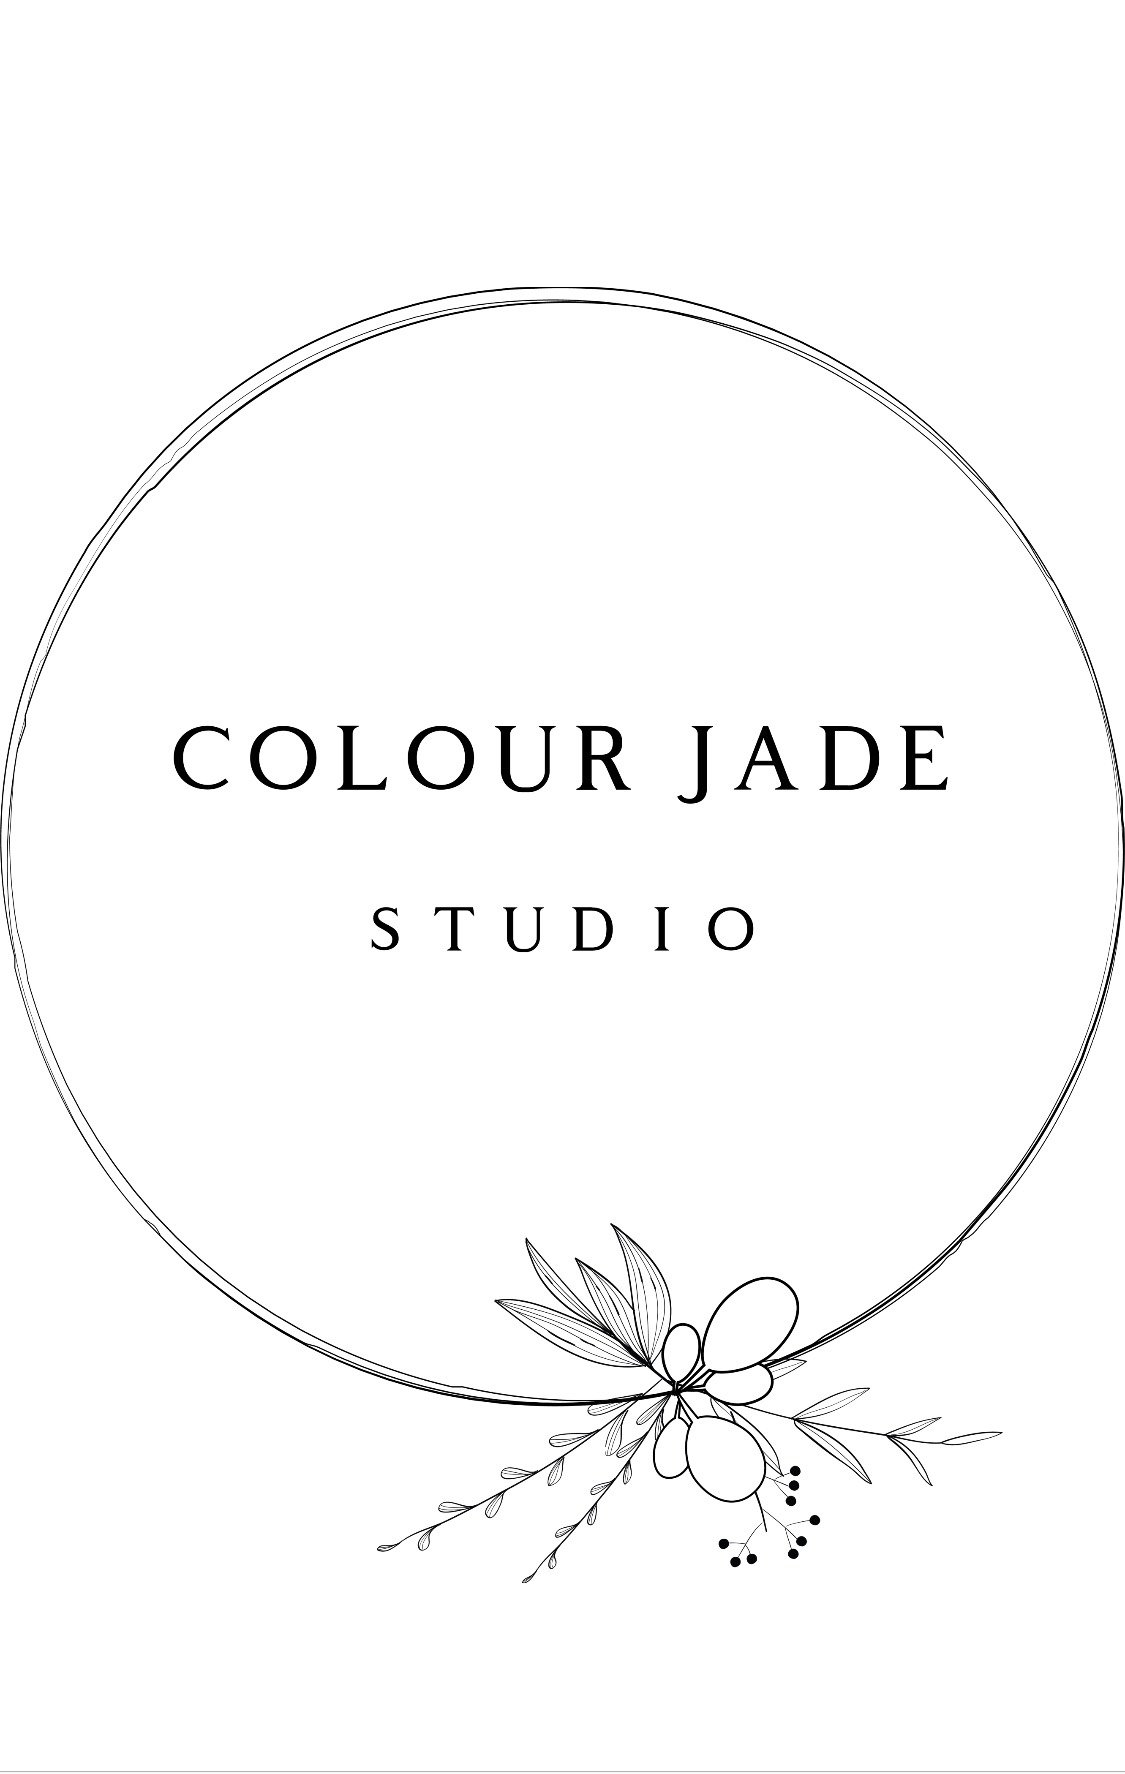 Colour Jade Studio logo